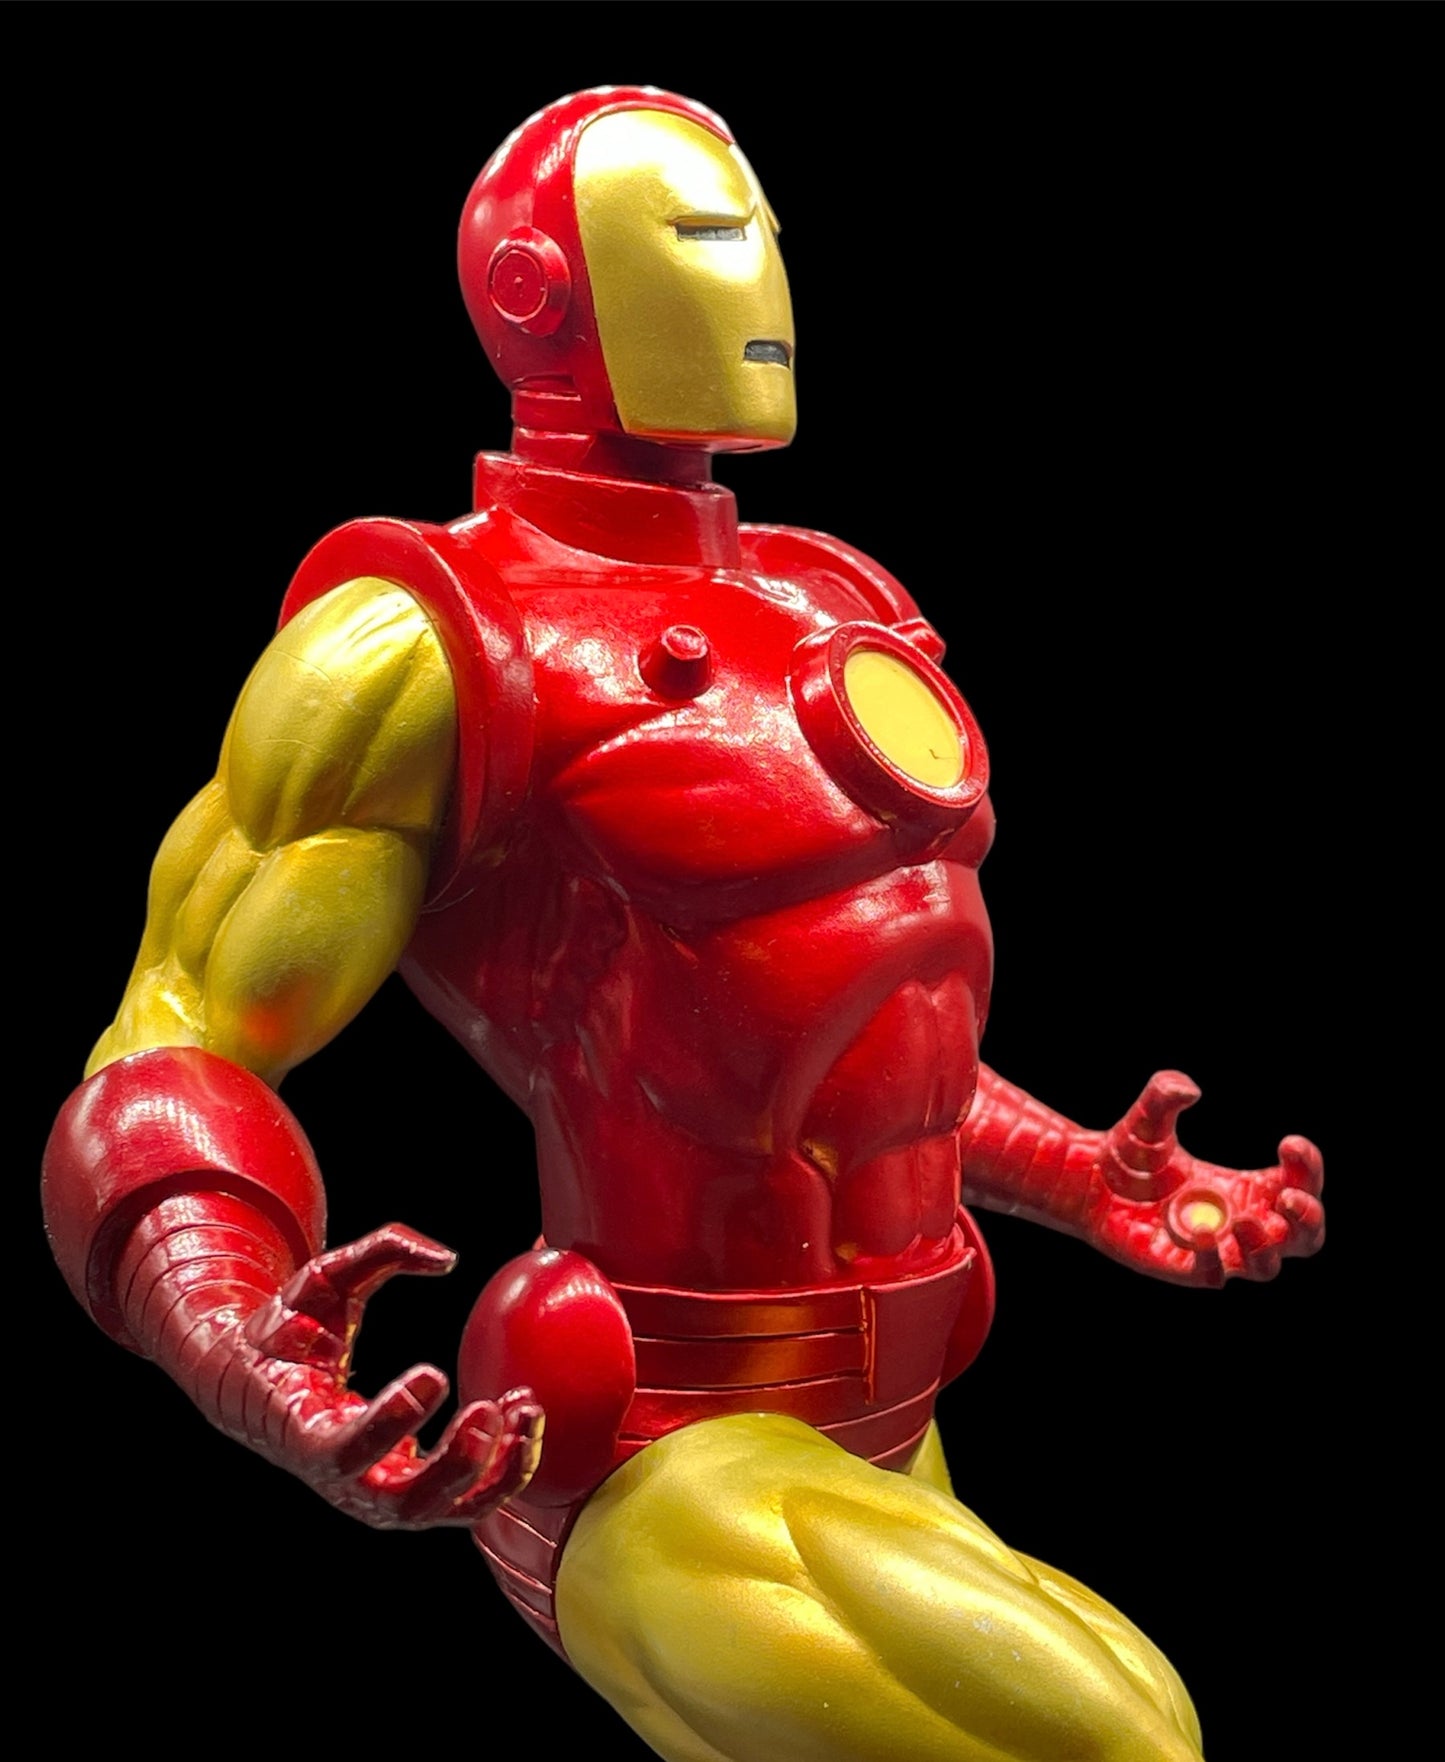 Diamond Select Toys: Marvel Gallery Classic Iron Man PVC Figure Statuette